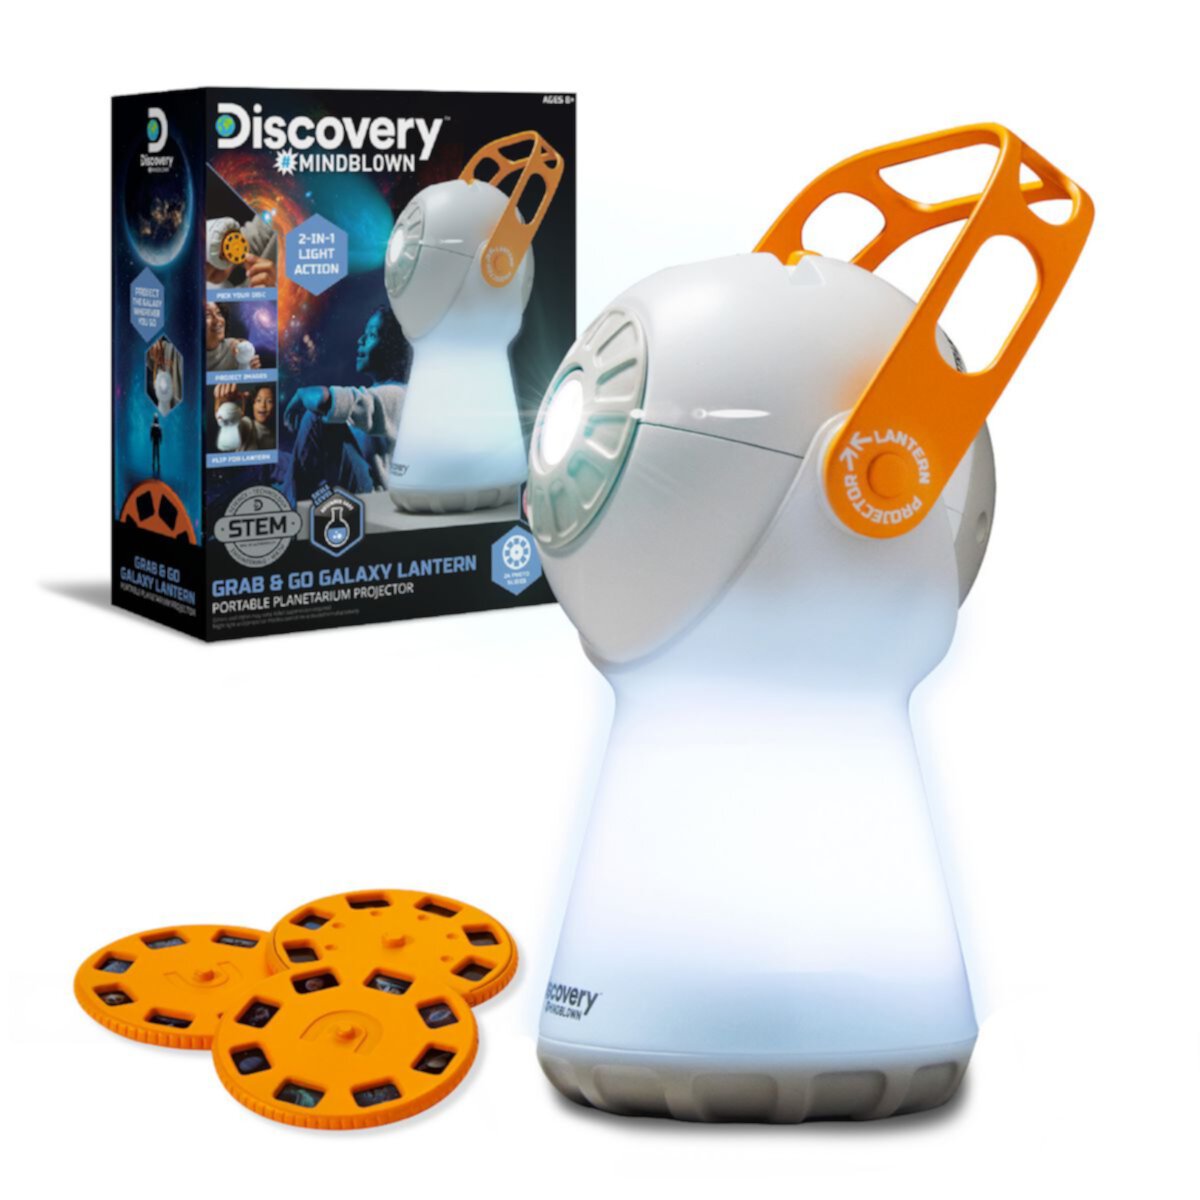 Discovery Mindblown Discovery™ #Mindblown Grab & Go Galaxy Lantern Portable Planetarium Projector Discovery Mindblown